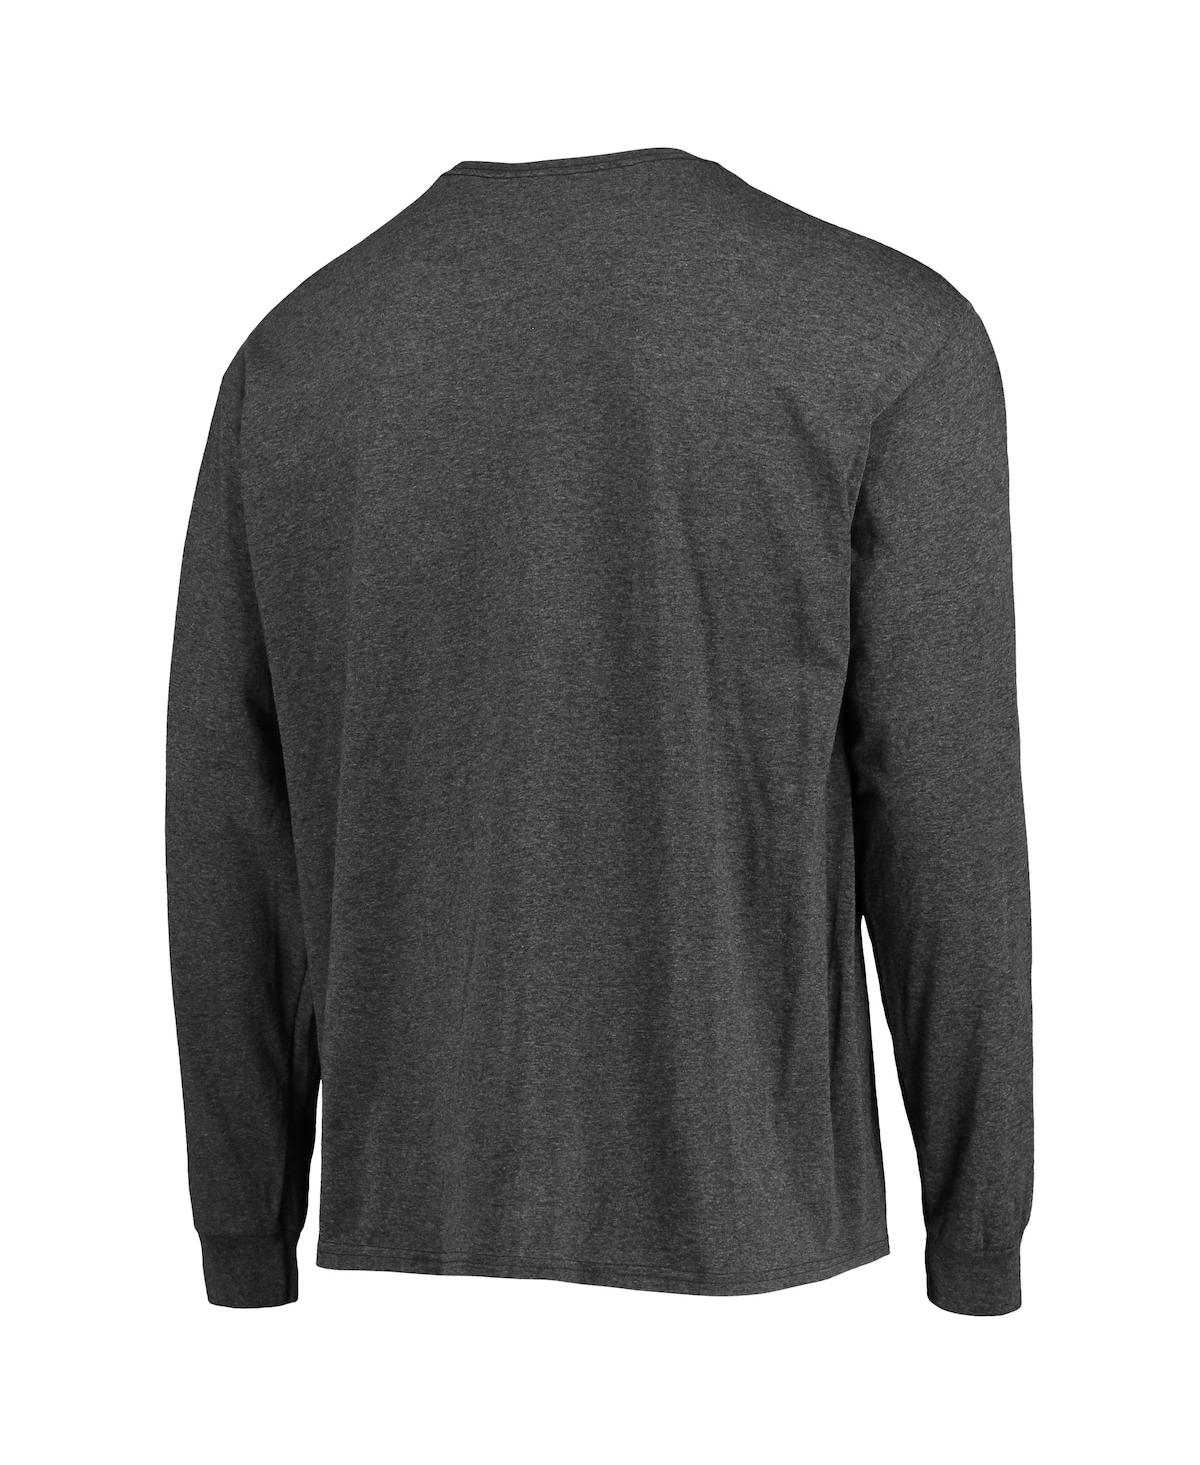 Shop Retro Brand Men's Original  Cooper Kupp Heathered Black Eastern Washington Eagles Long Sleeve T-shirt